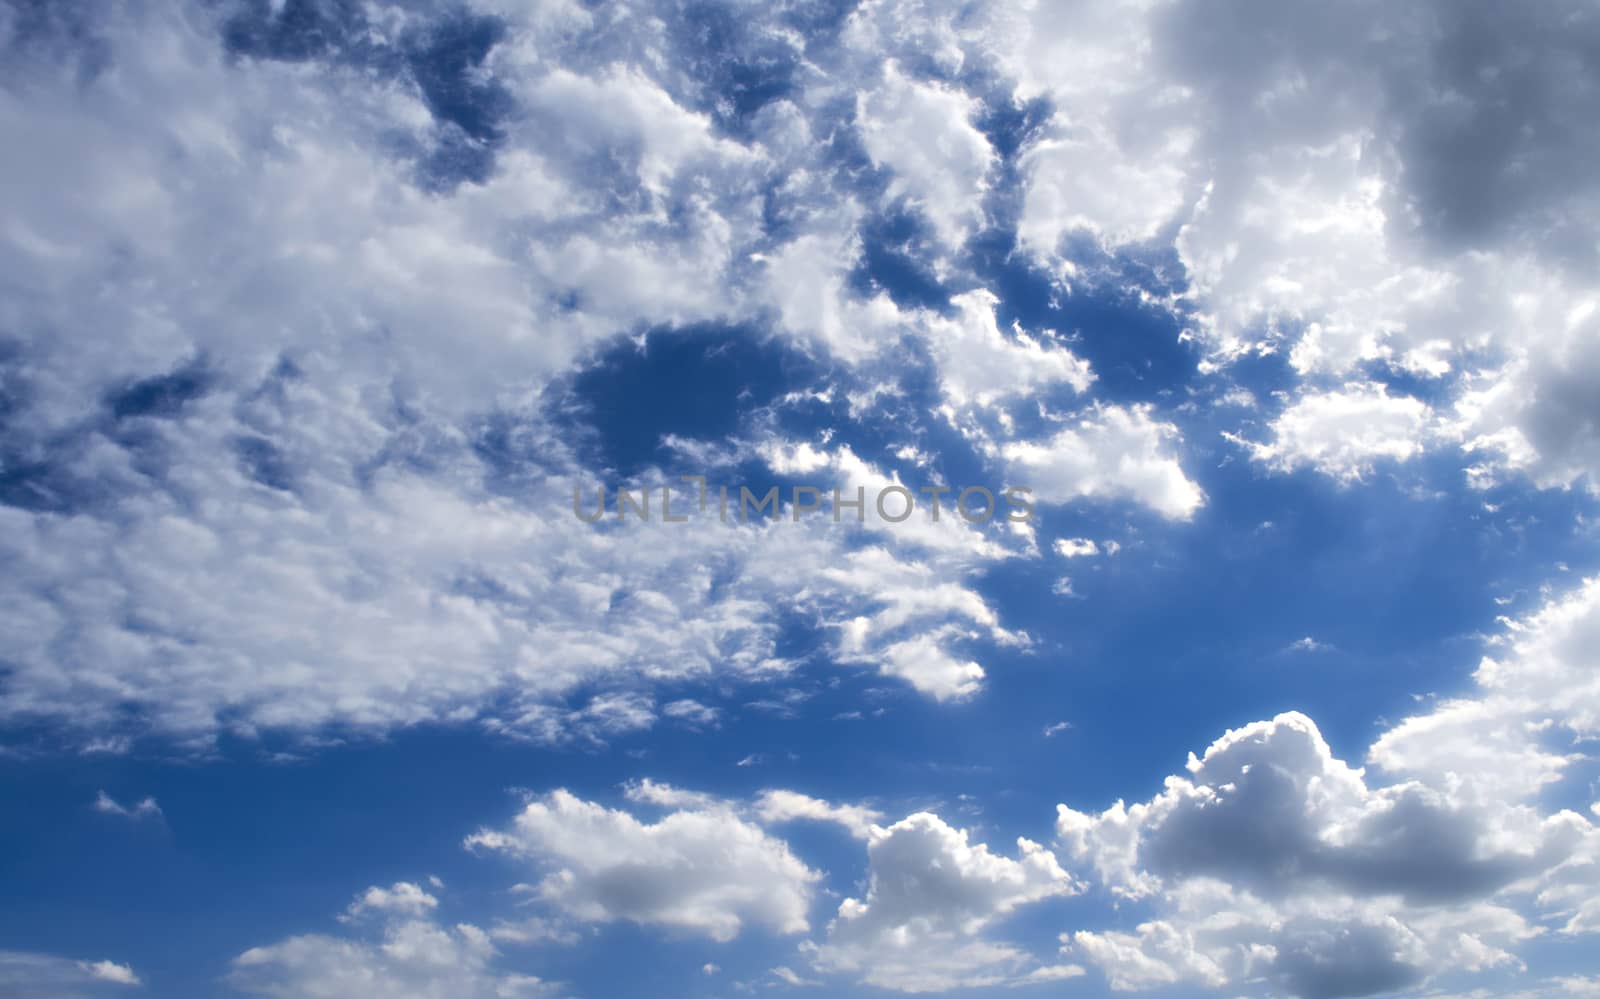 Fluffy Cloudy Blue Sky Scape 141 by kobfujar